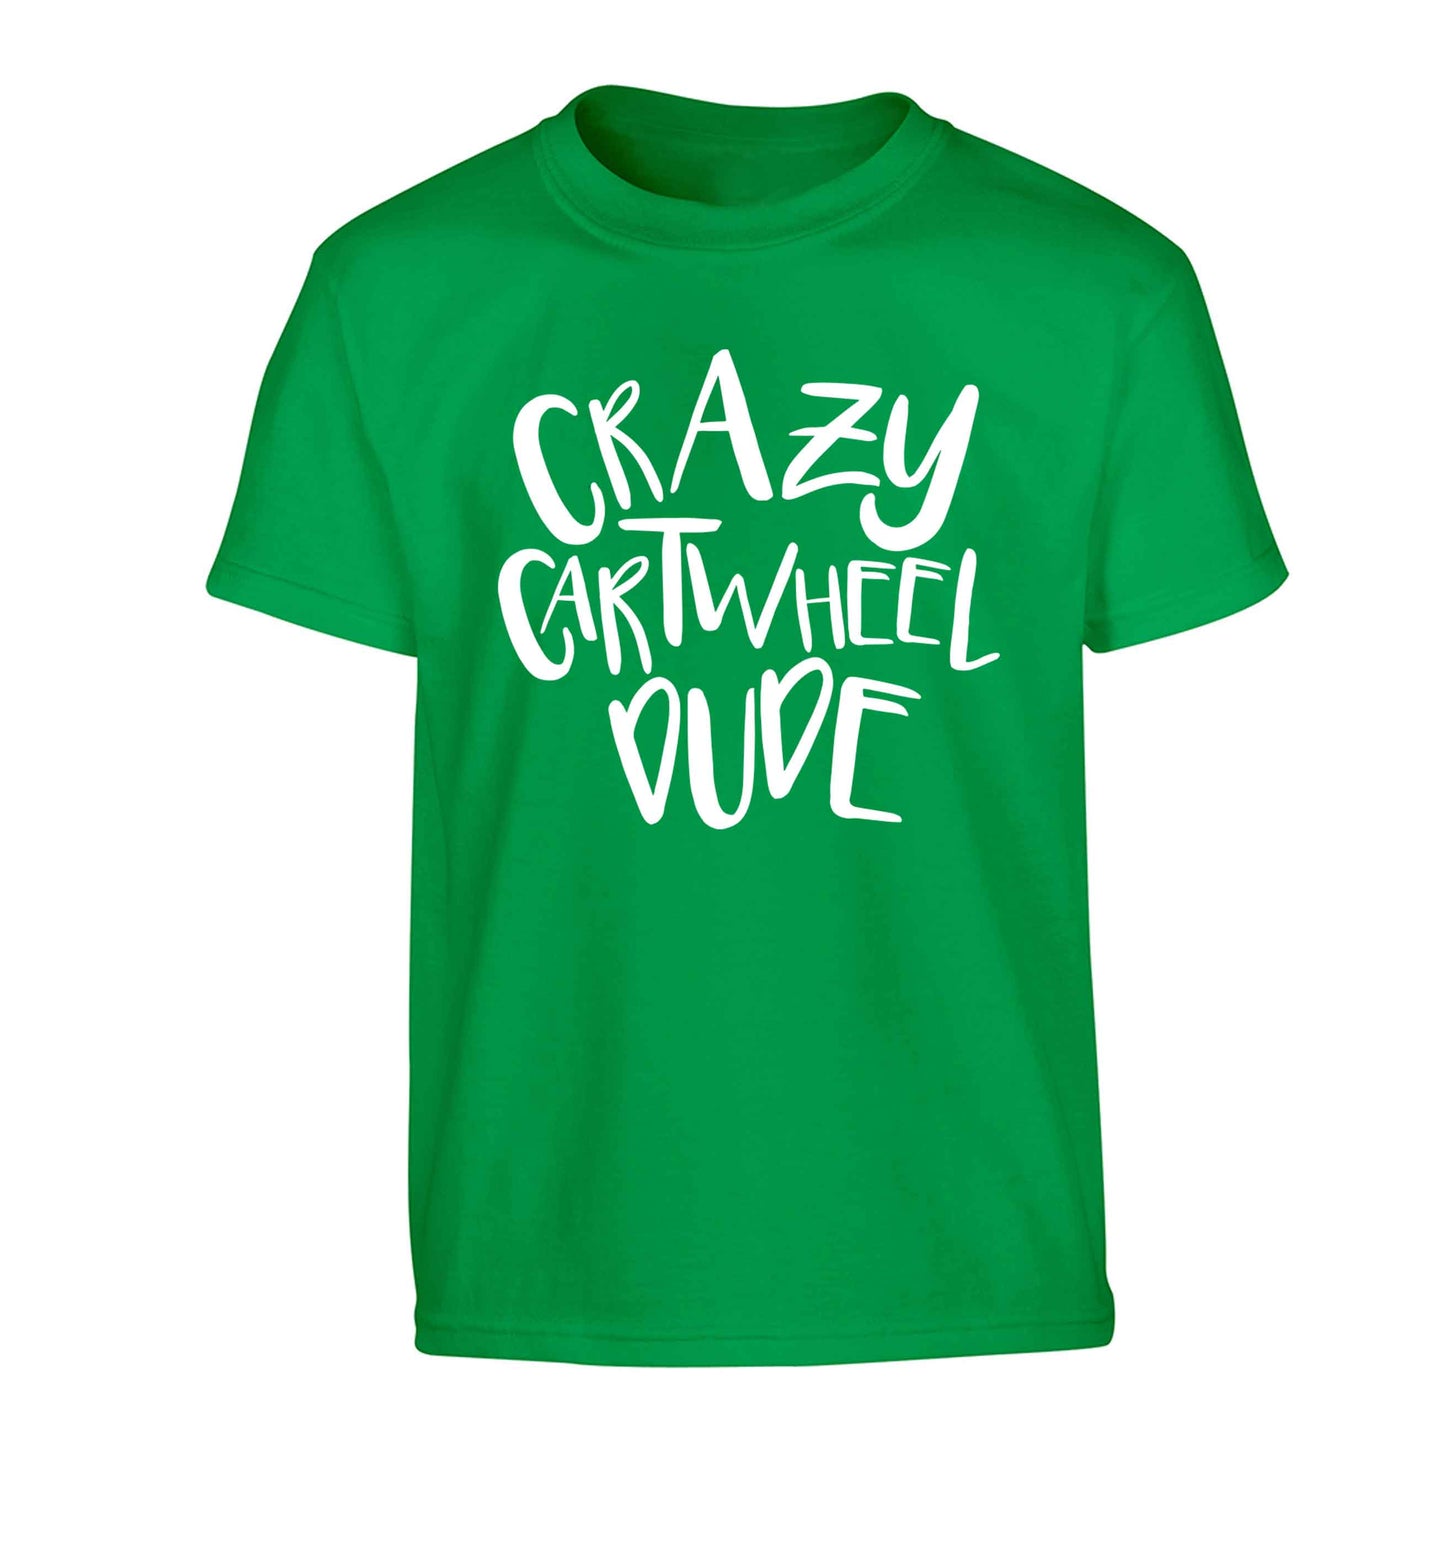 Crazy cartwheel dude Children's green Tshirt 12-13 Years